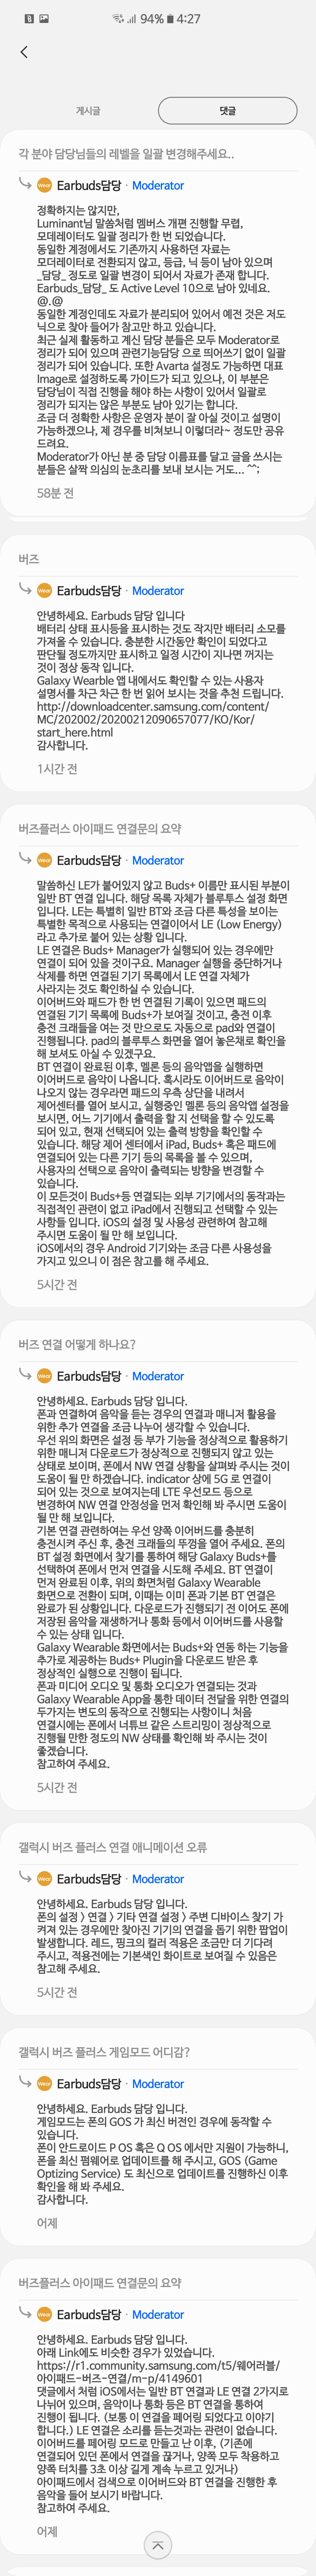 Screenshot_20200315-162659_Samsung Members.jpg